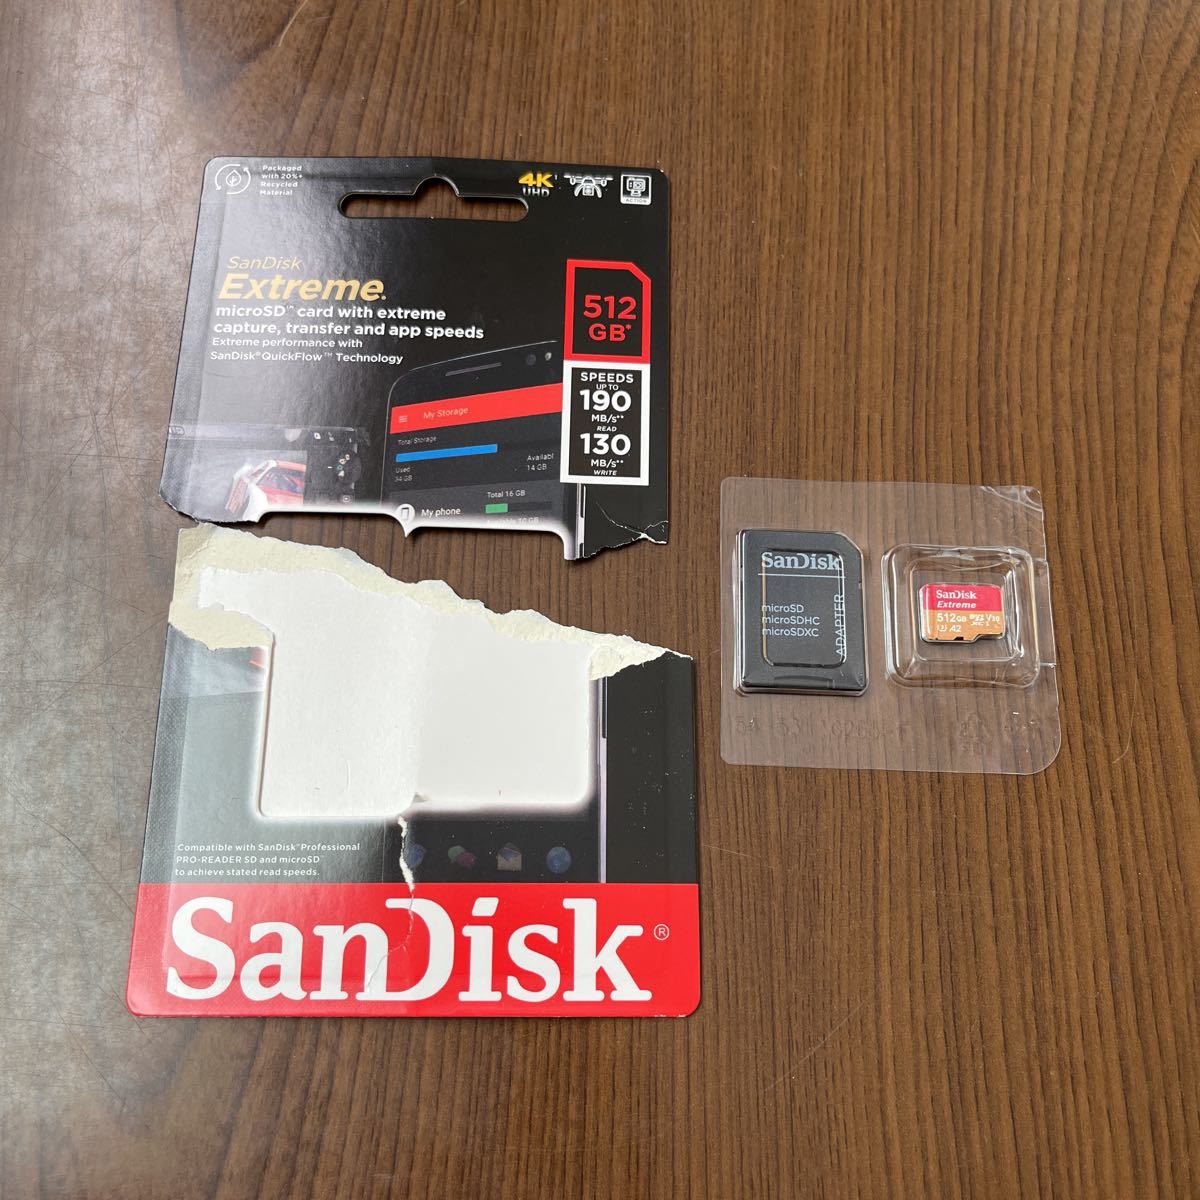 509a2903☆ SanDisk microSDXC UHS-I カード 512GB Extreme 超高速タイプ（読込最大190MB/s  書込最大130MB/s）